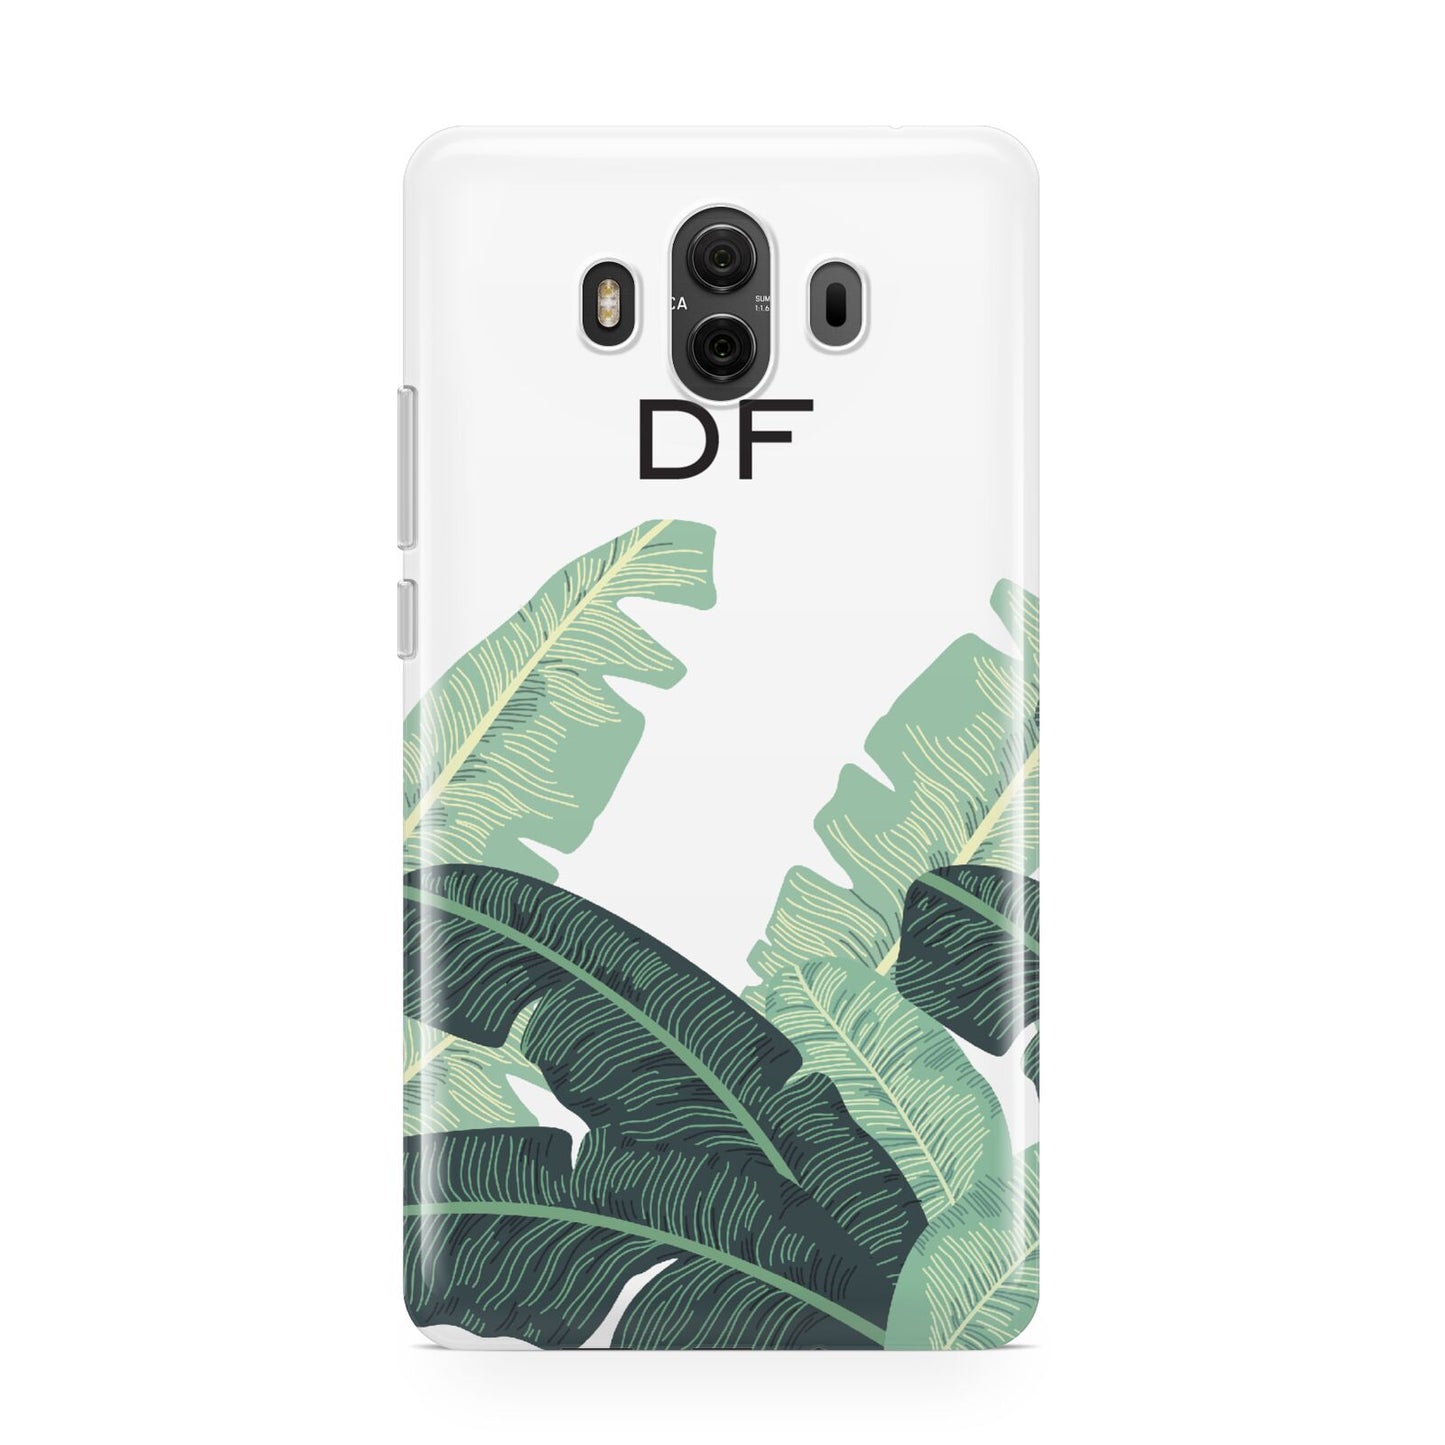 Personalised White Banana Leaf Huawei Mate 10 Protective Phone Case